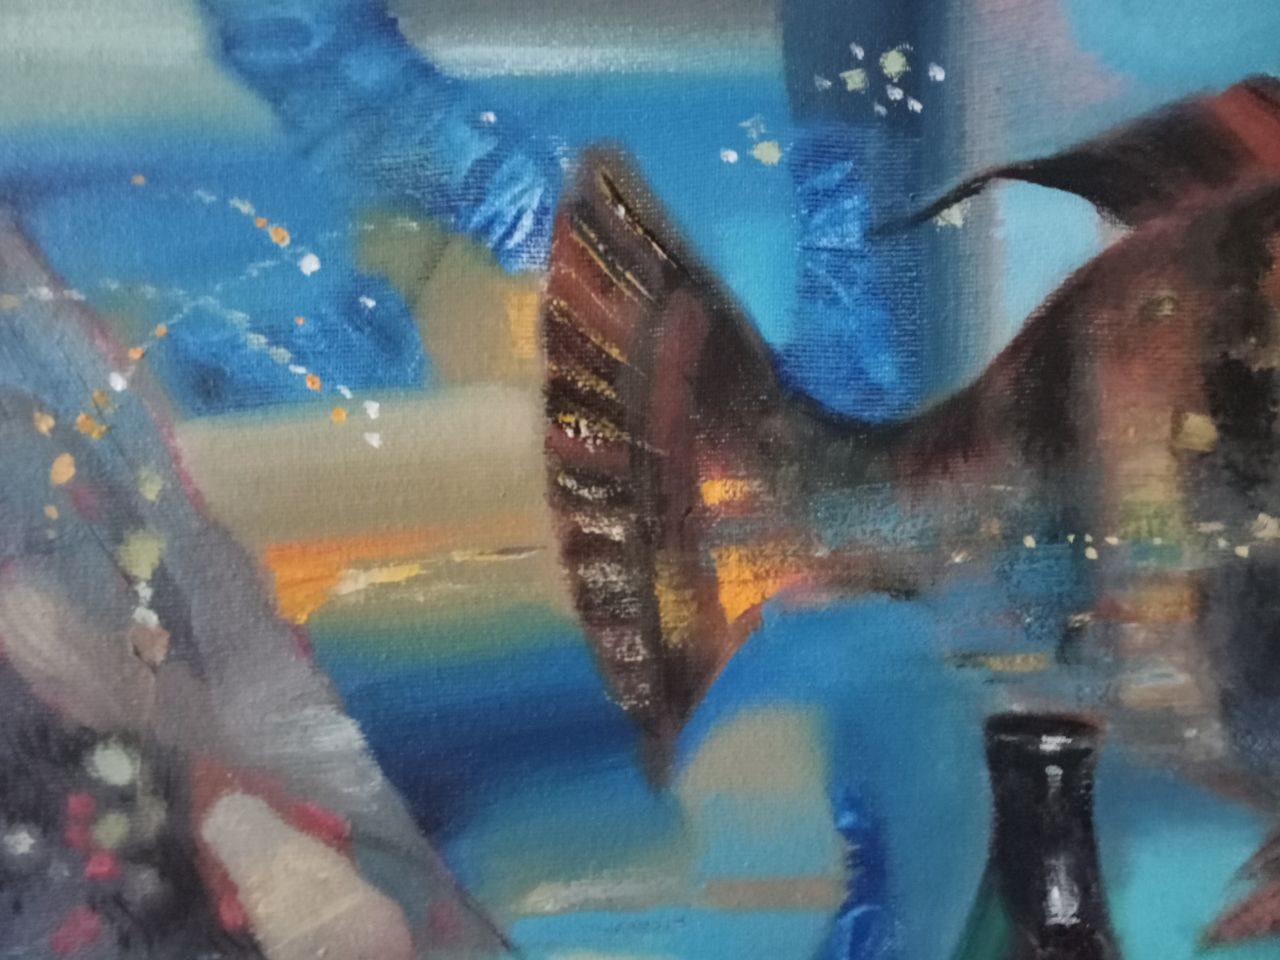 Artist: Anatoly Borisovich Tarabanov
Work: Original oil painting, handmade artwork, one of a kind 
Medium: Oil on Canvas 
Year: 2017
Style: Contemporary Art
Title: Still Life with Fish
Size: 23.5